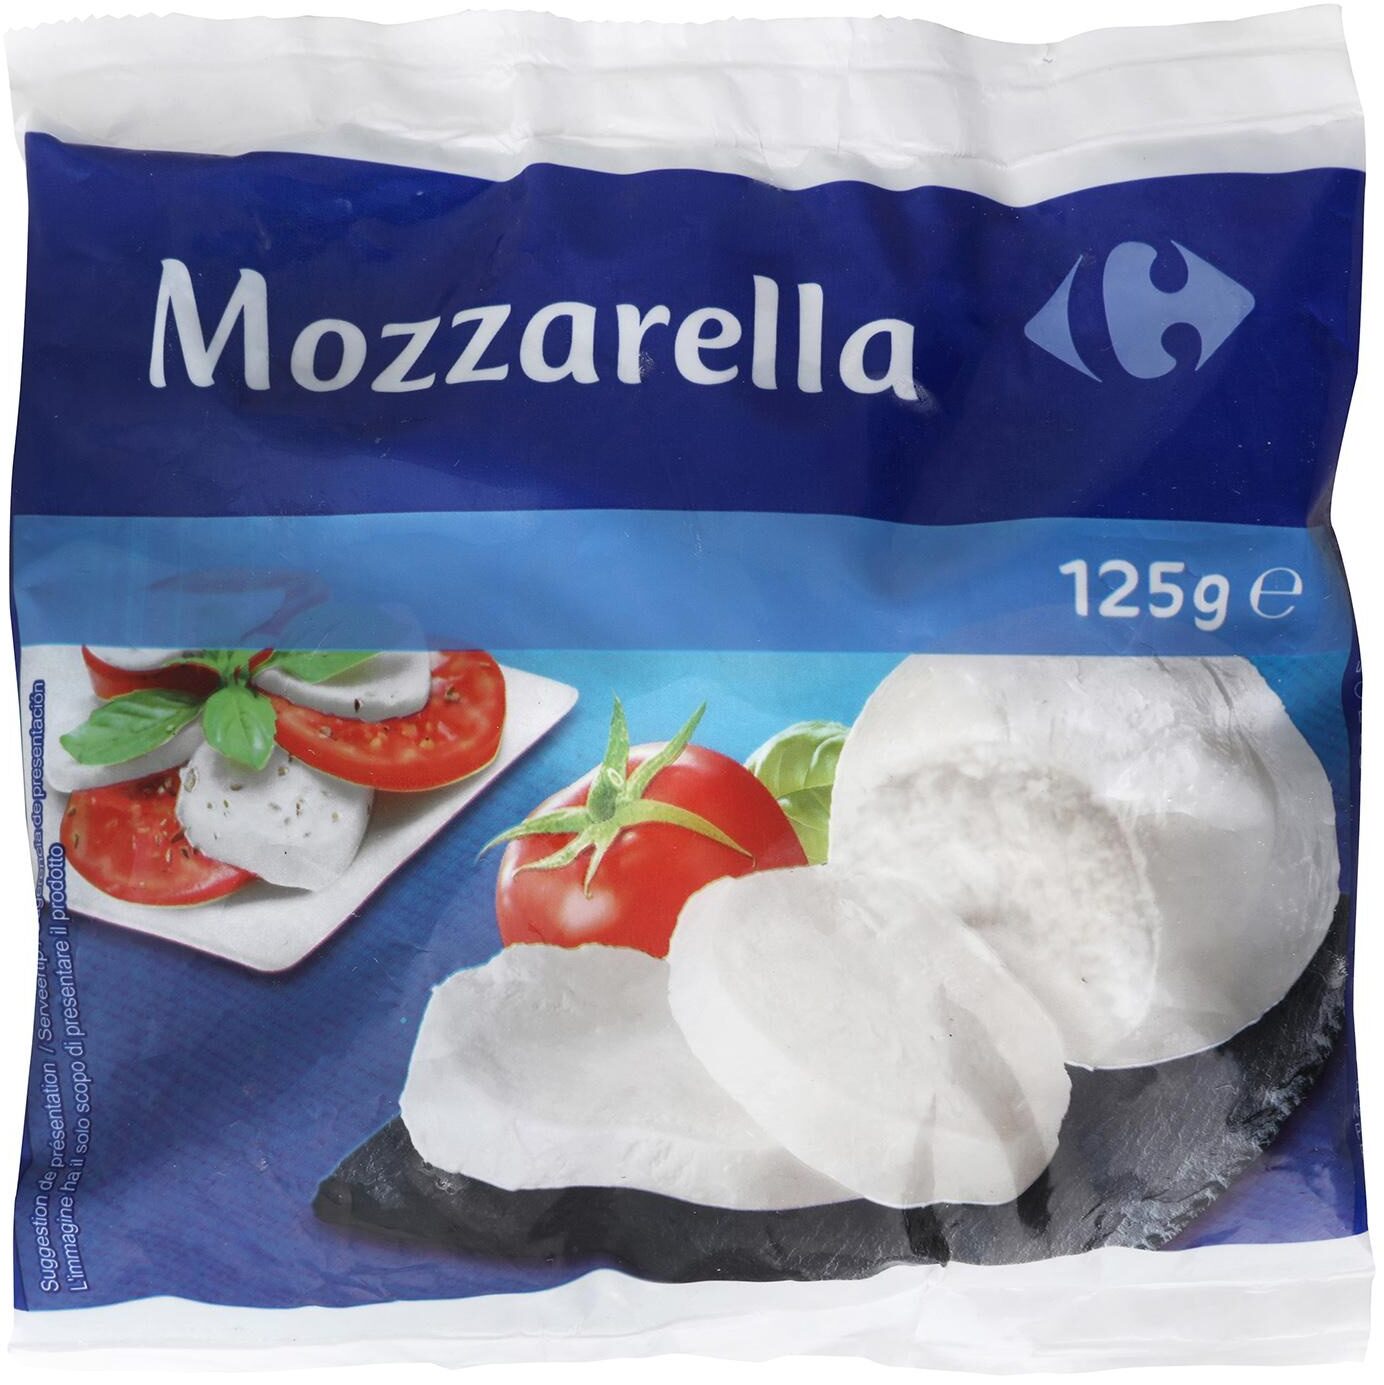 Mozzarella - Producte - en